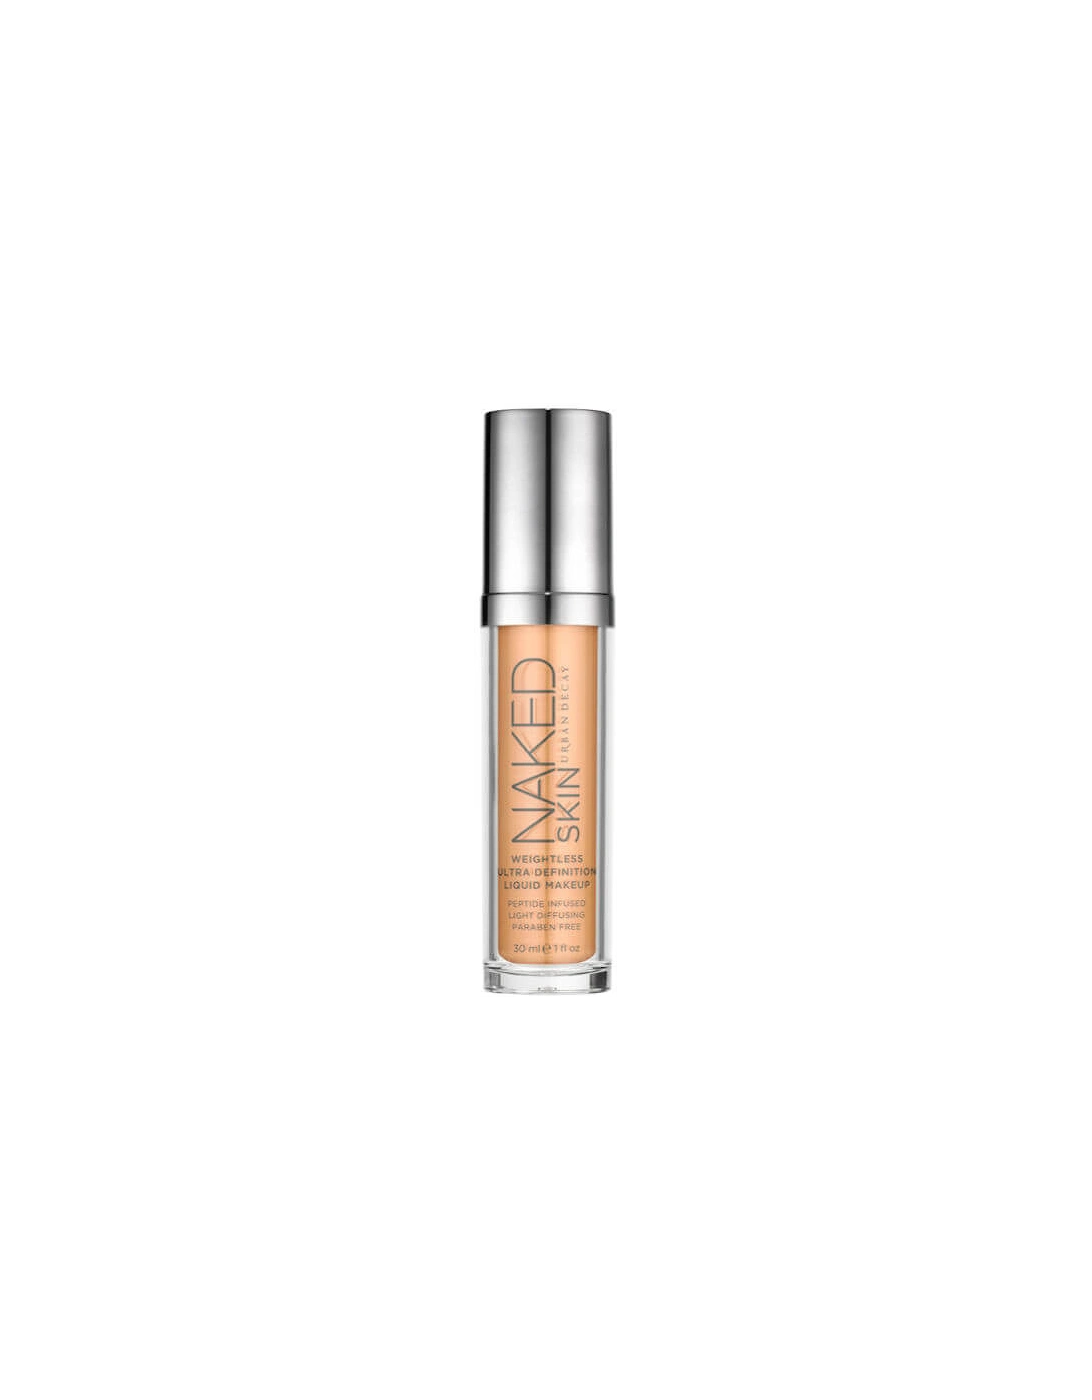 Naked Skin Liquid Makeup - 13.0